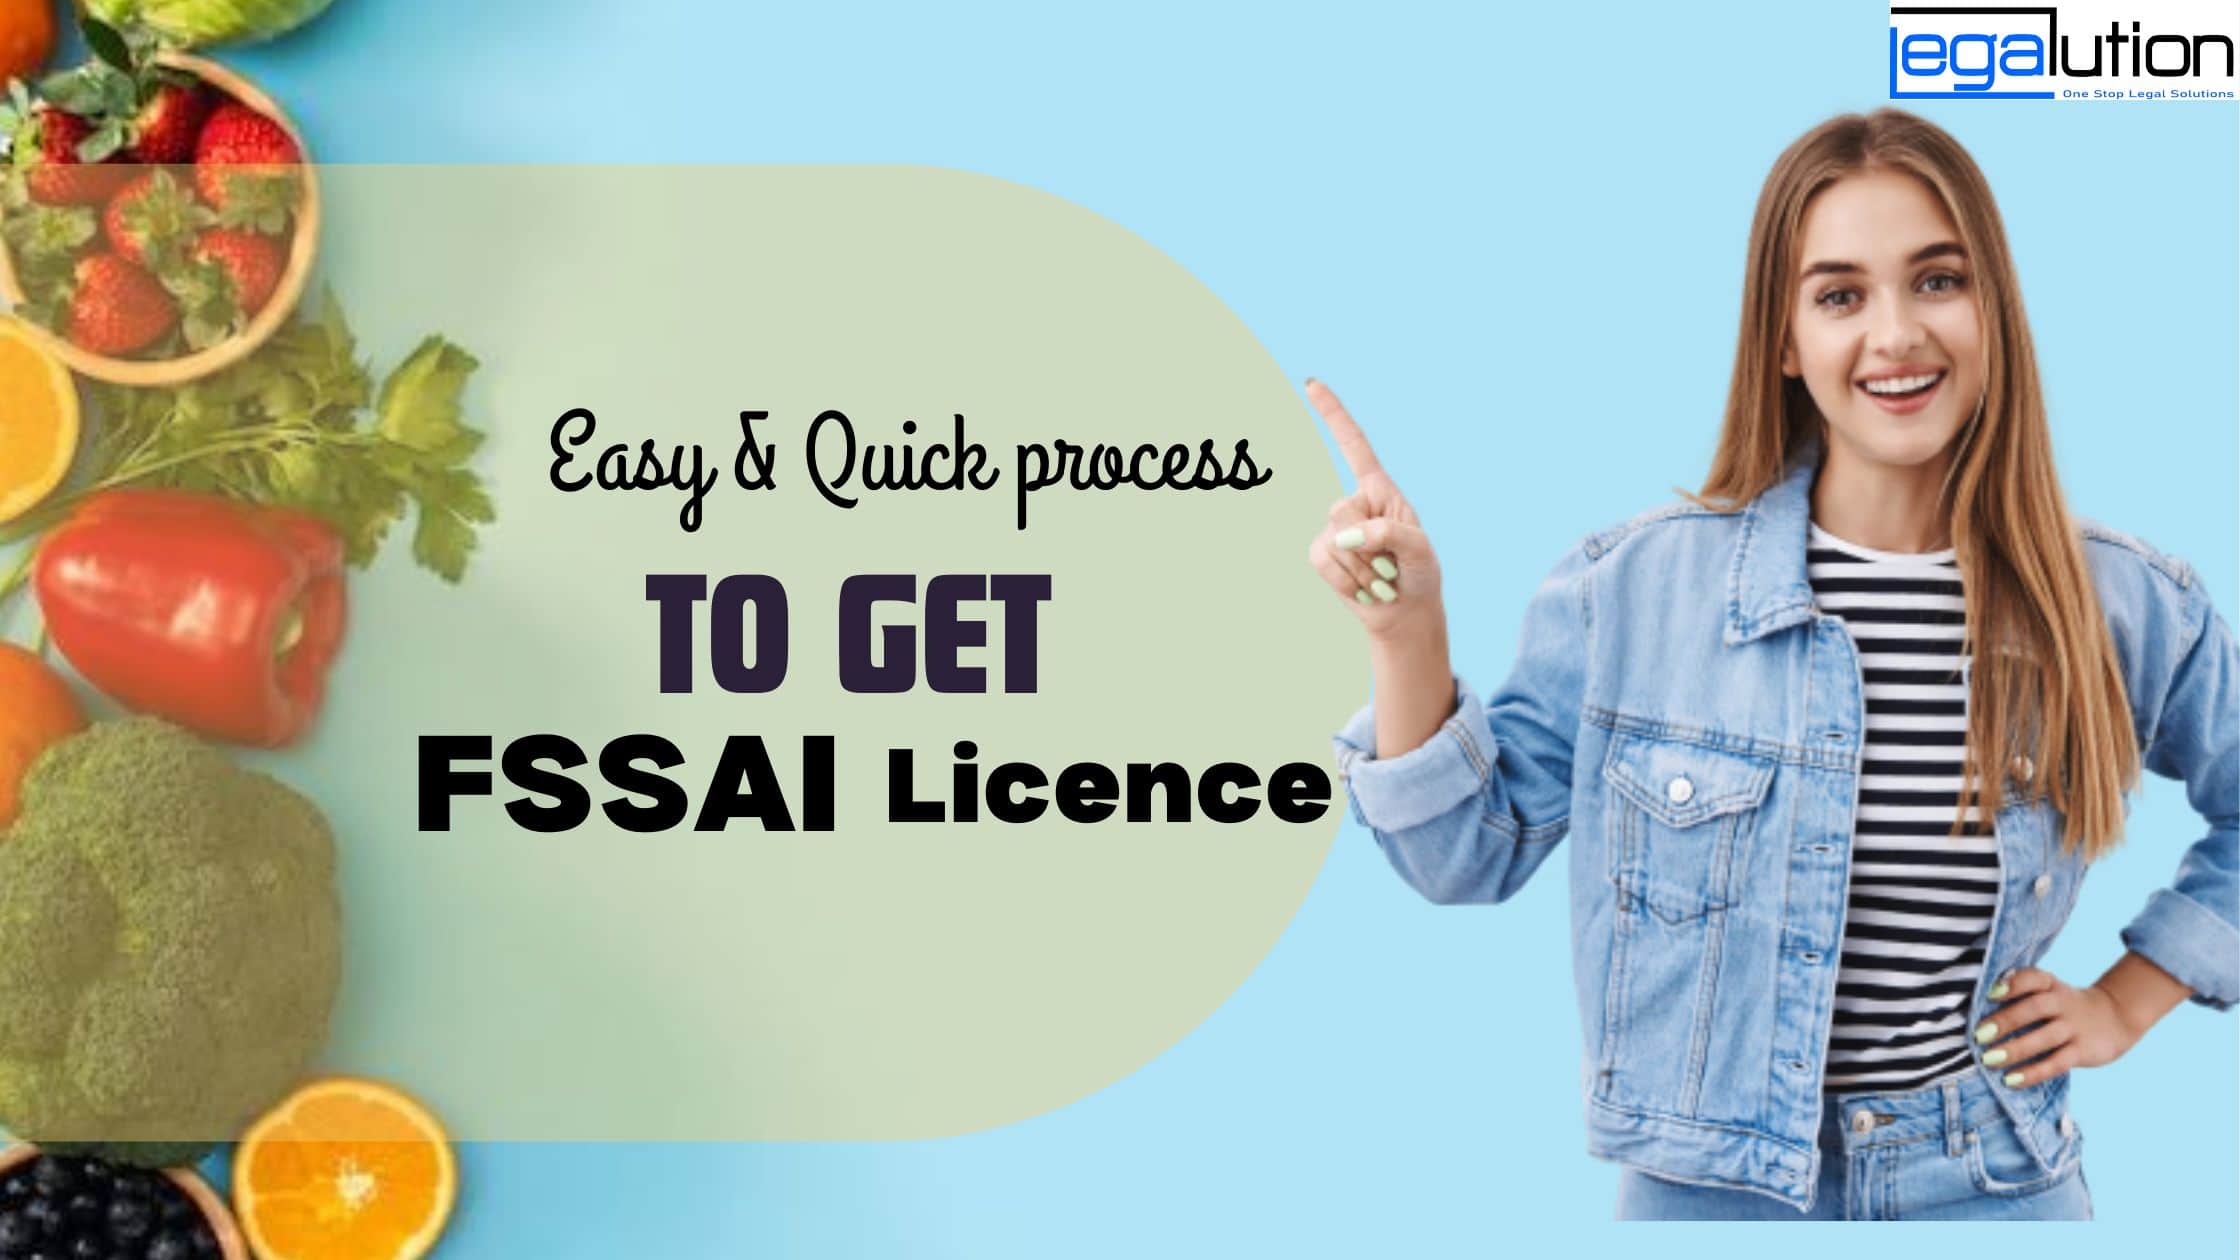 Quick process to File FSSAI Registration Online Apply